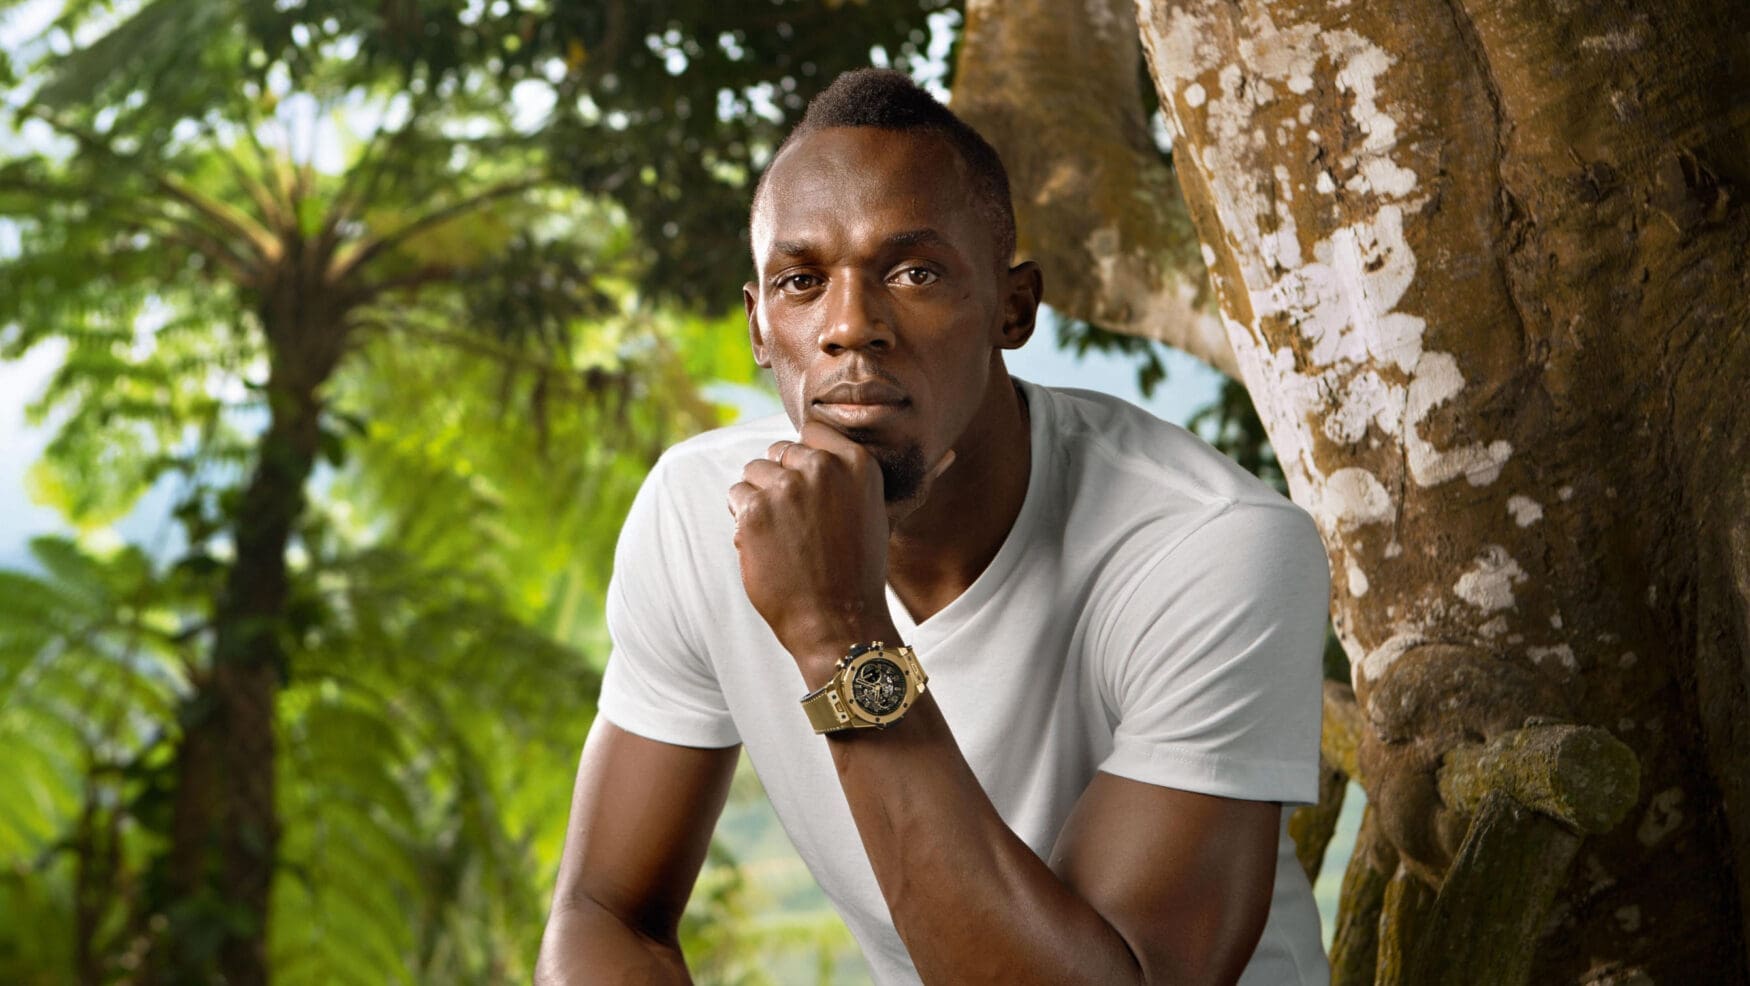 Five of the coolest Hublot ambassadors from Kylian Mbappé to Usain Bolt